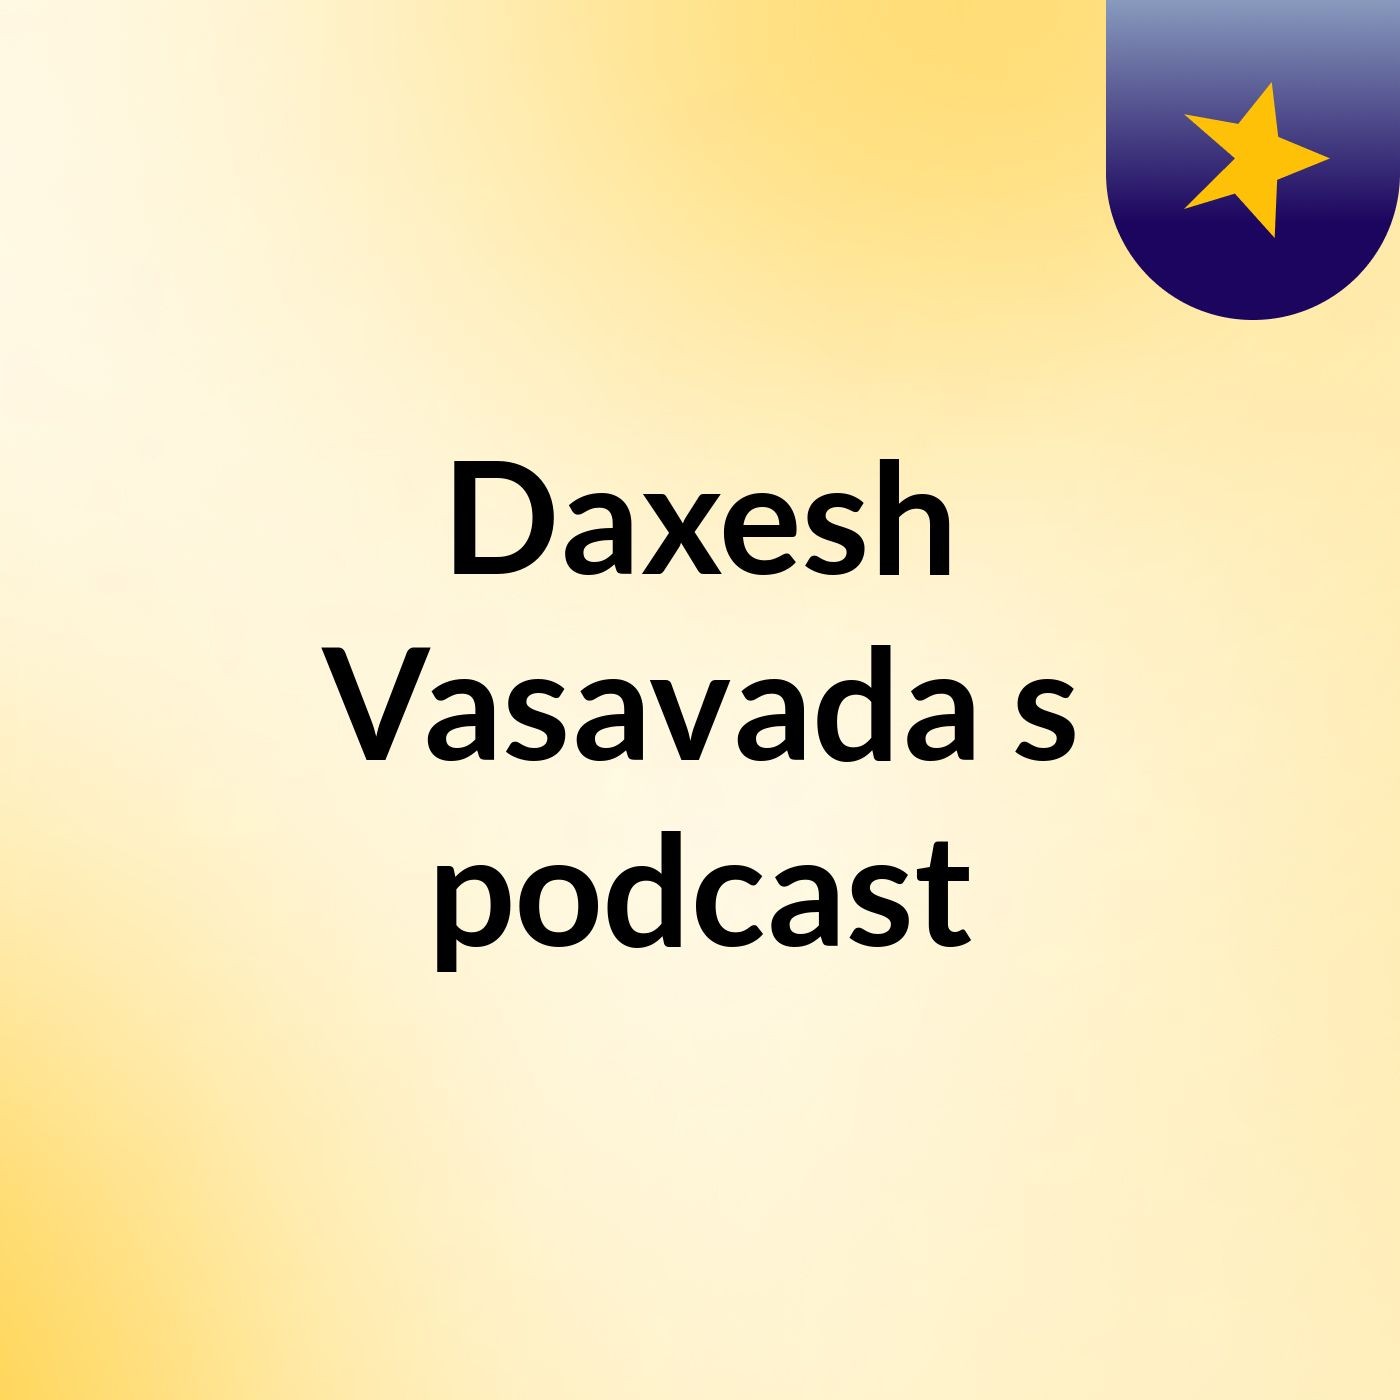 Daxesh Vasavada's podcast